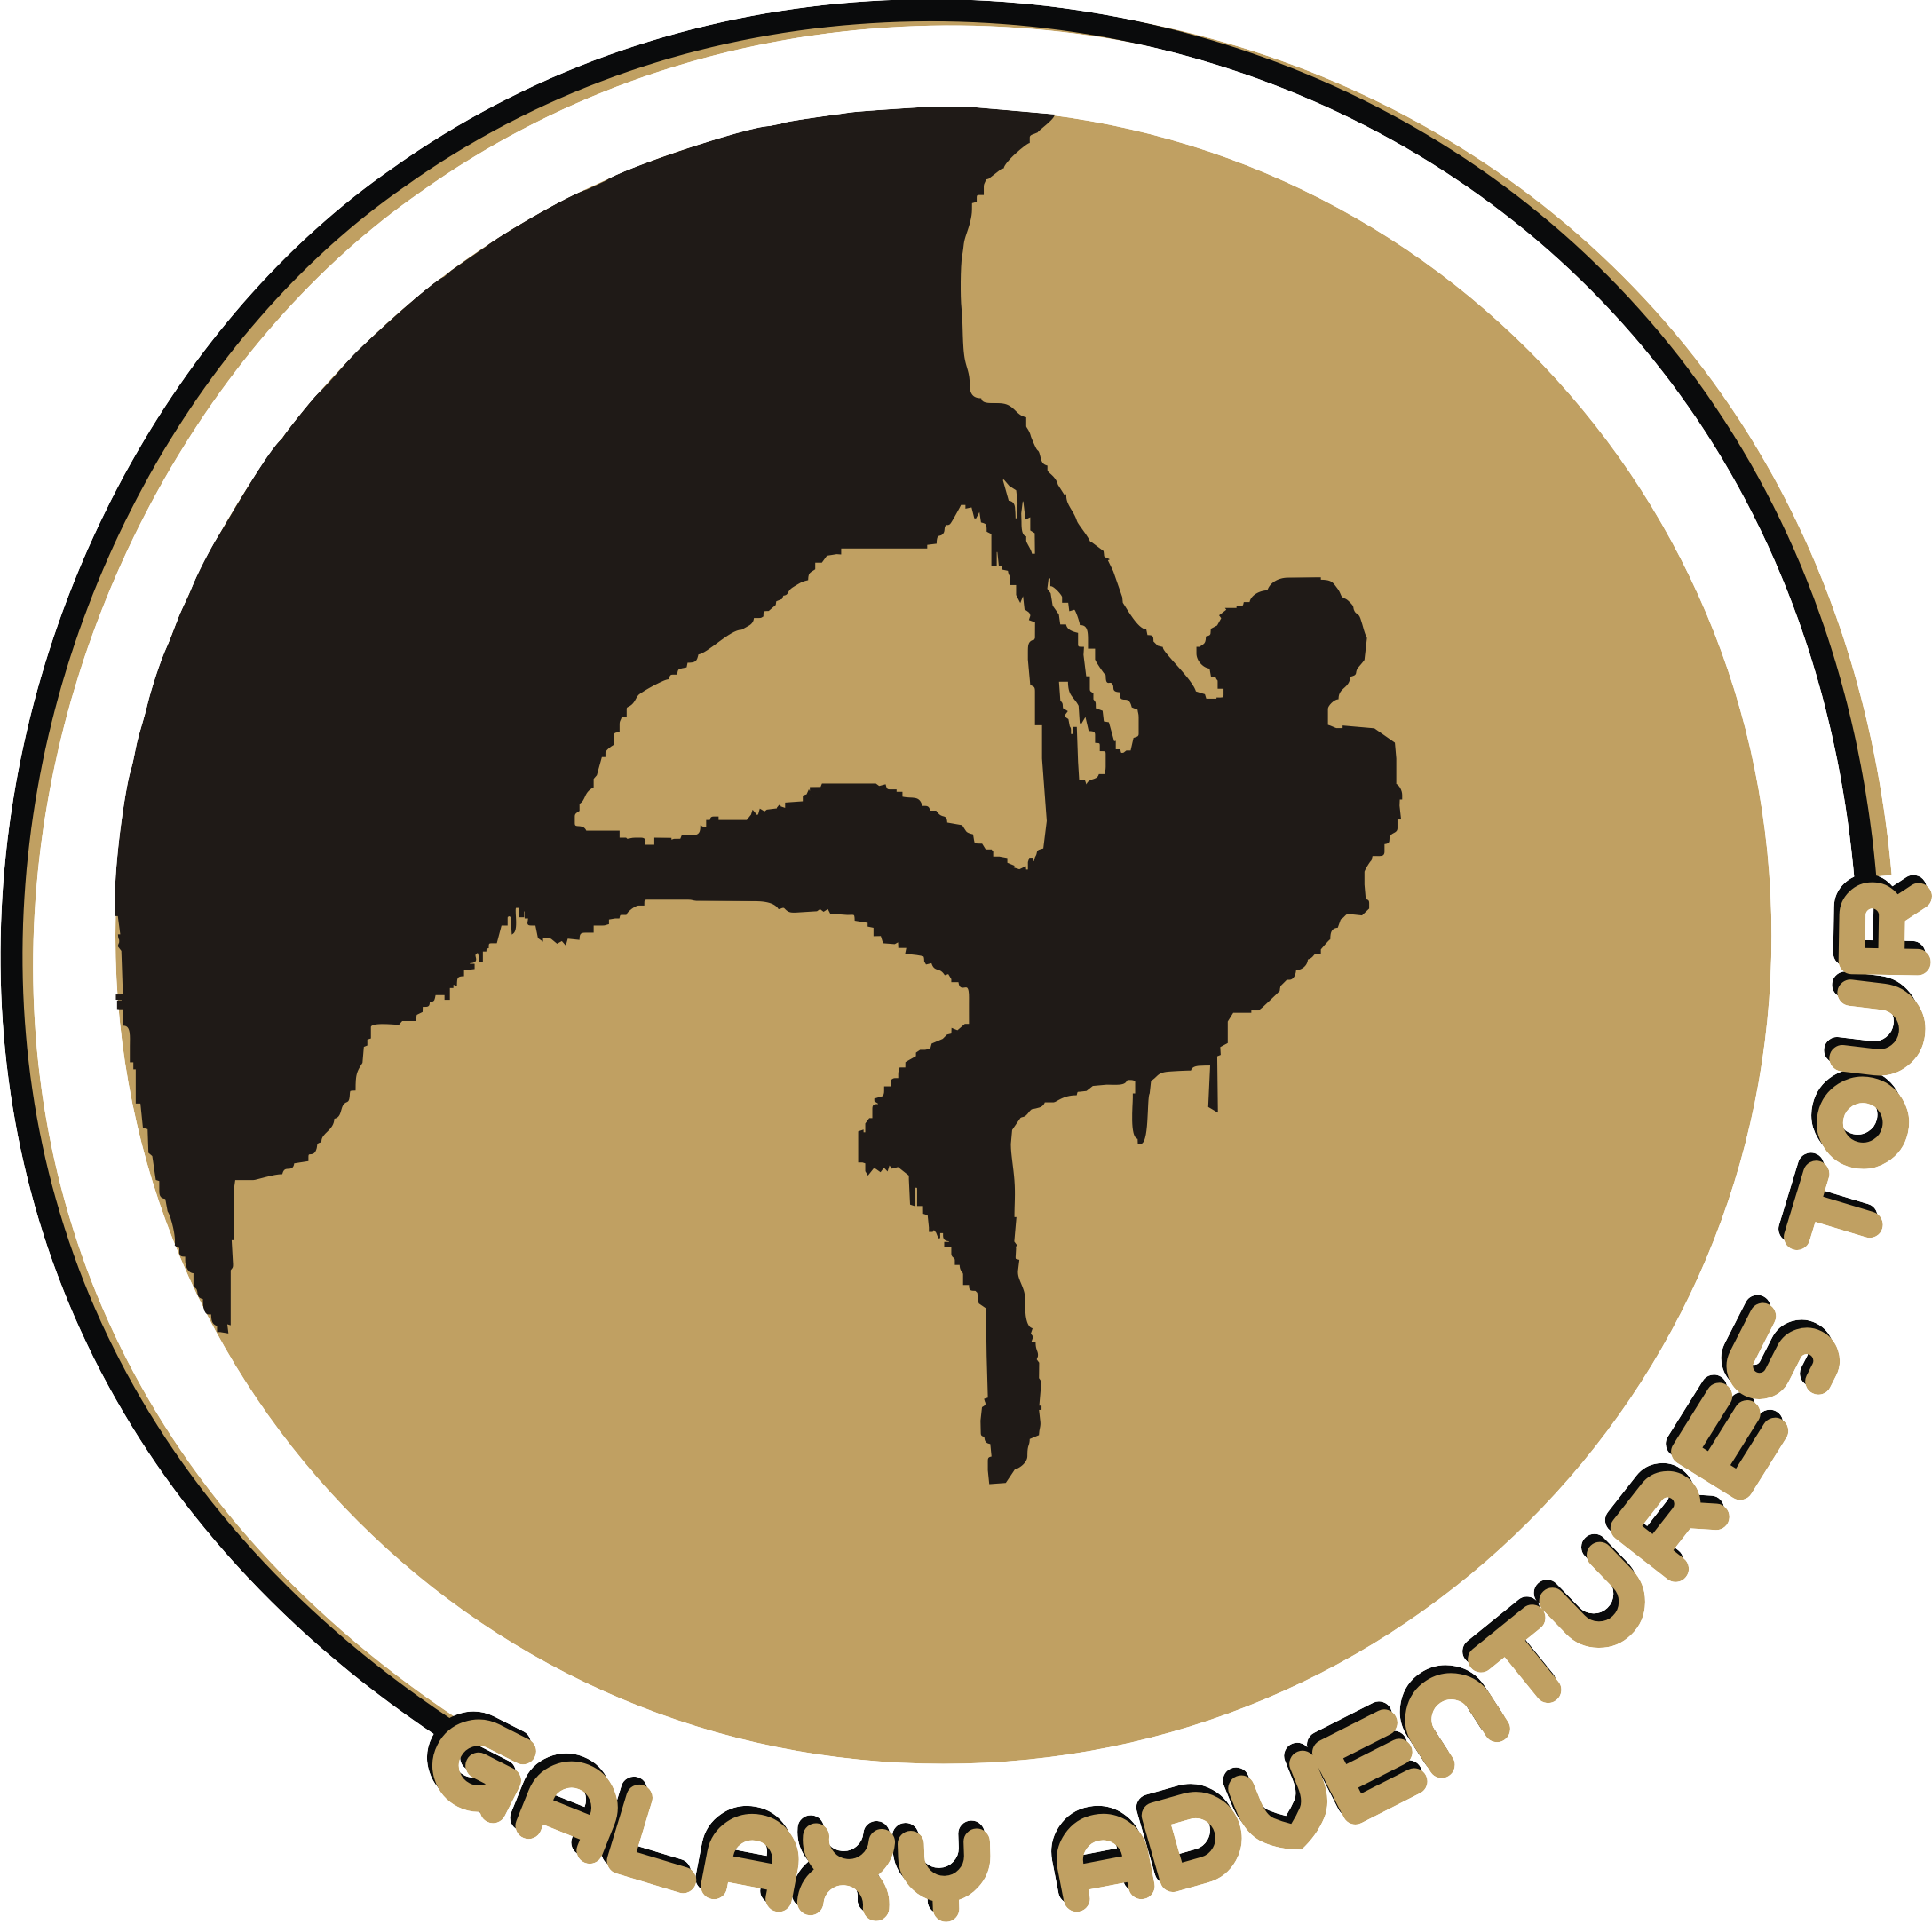 Galaxy Adventures Tour